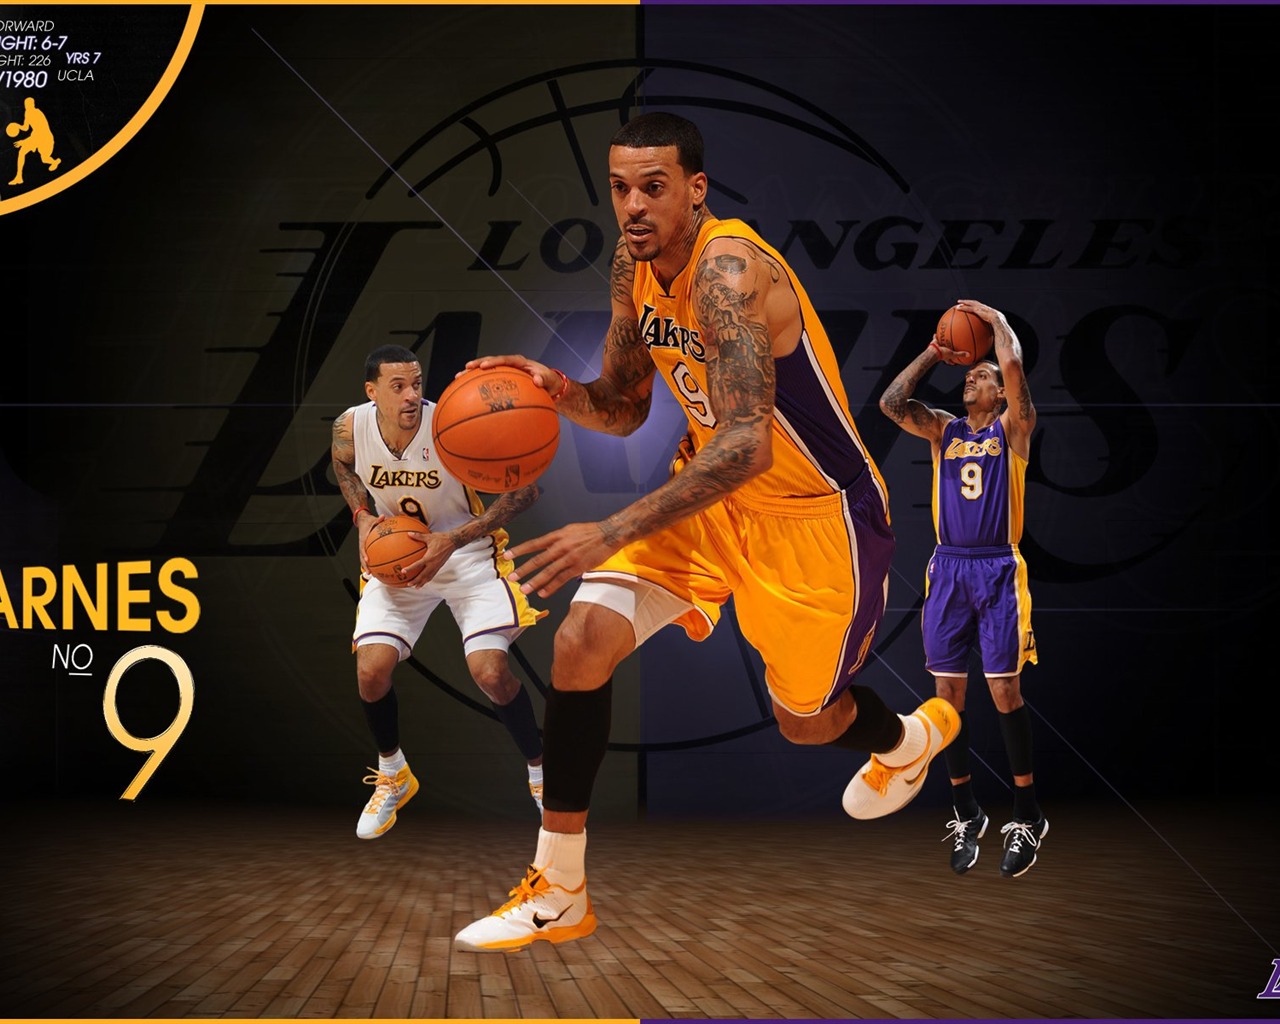 NBA 2010-11 season, the Los Angeles Lakers Wallpapers #9 - 1280x1024